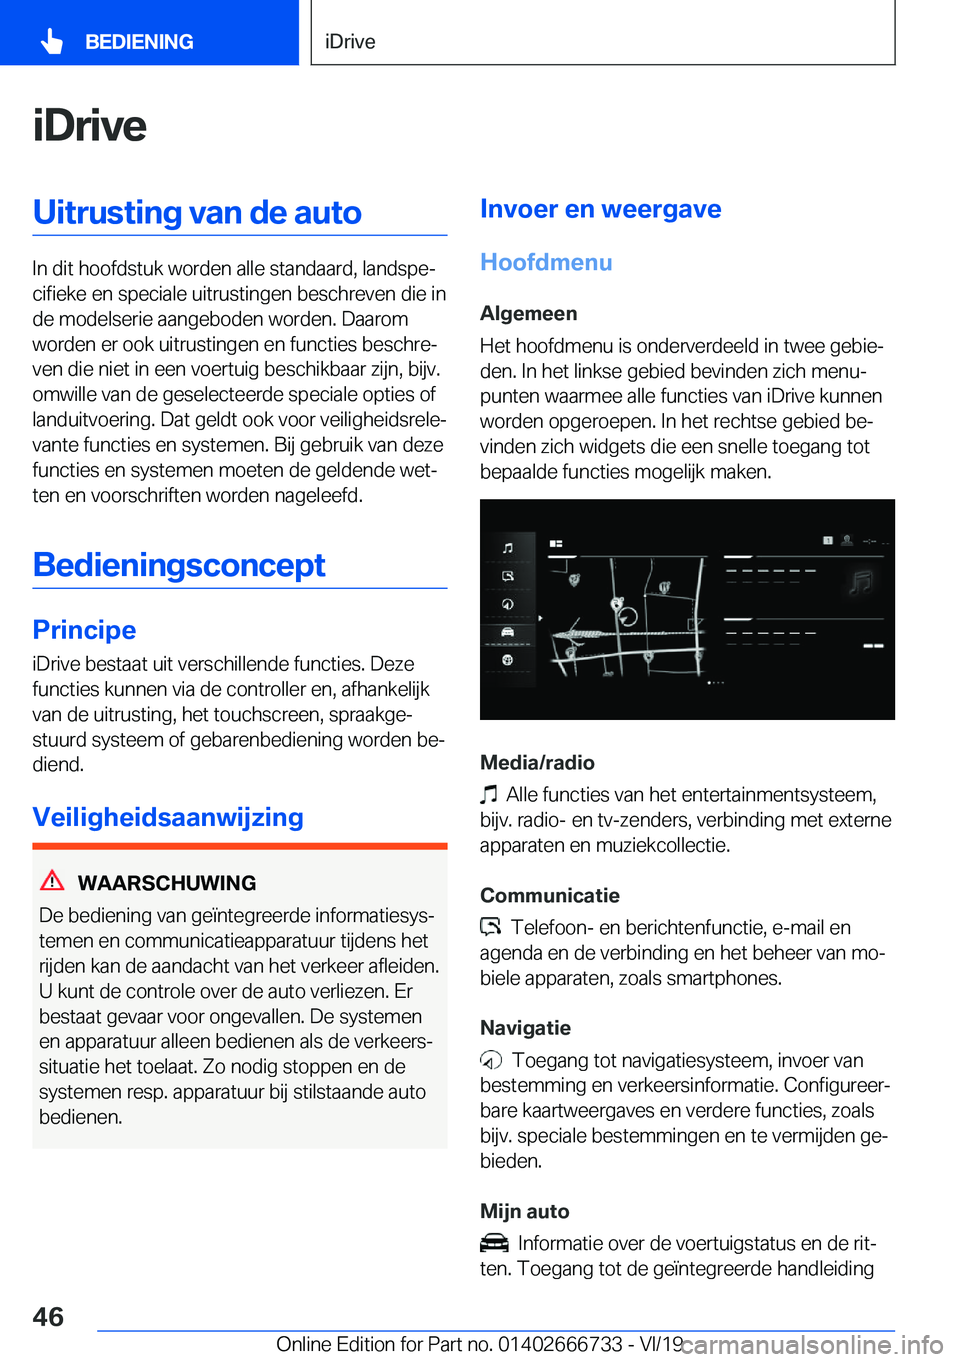 BMW M5 2020  Instructieboekjes (in Dutch) �i�D�r�i�v�e�U�i�t�r�u�s�t�i�n�g��v�a�n��d�e��a�u�t�o
�I�n��d�i�t��h�o�o�f�d�s�t�u�k��w�o�r�d�e�n��a�l�l�e��s�t�a�n�d�a�a�r�d�,��l�a�n�d�s�p�ej�c�i�f�i�e�k�e��e�n��s�p�e�c�i�a�l�e��u�i�t�